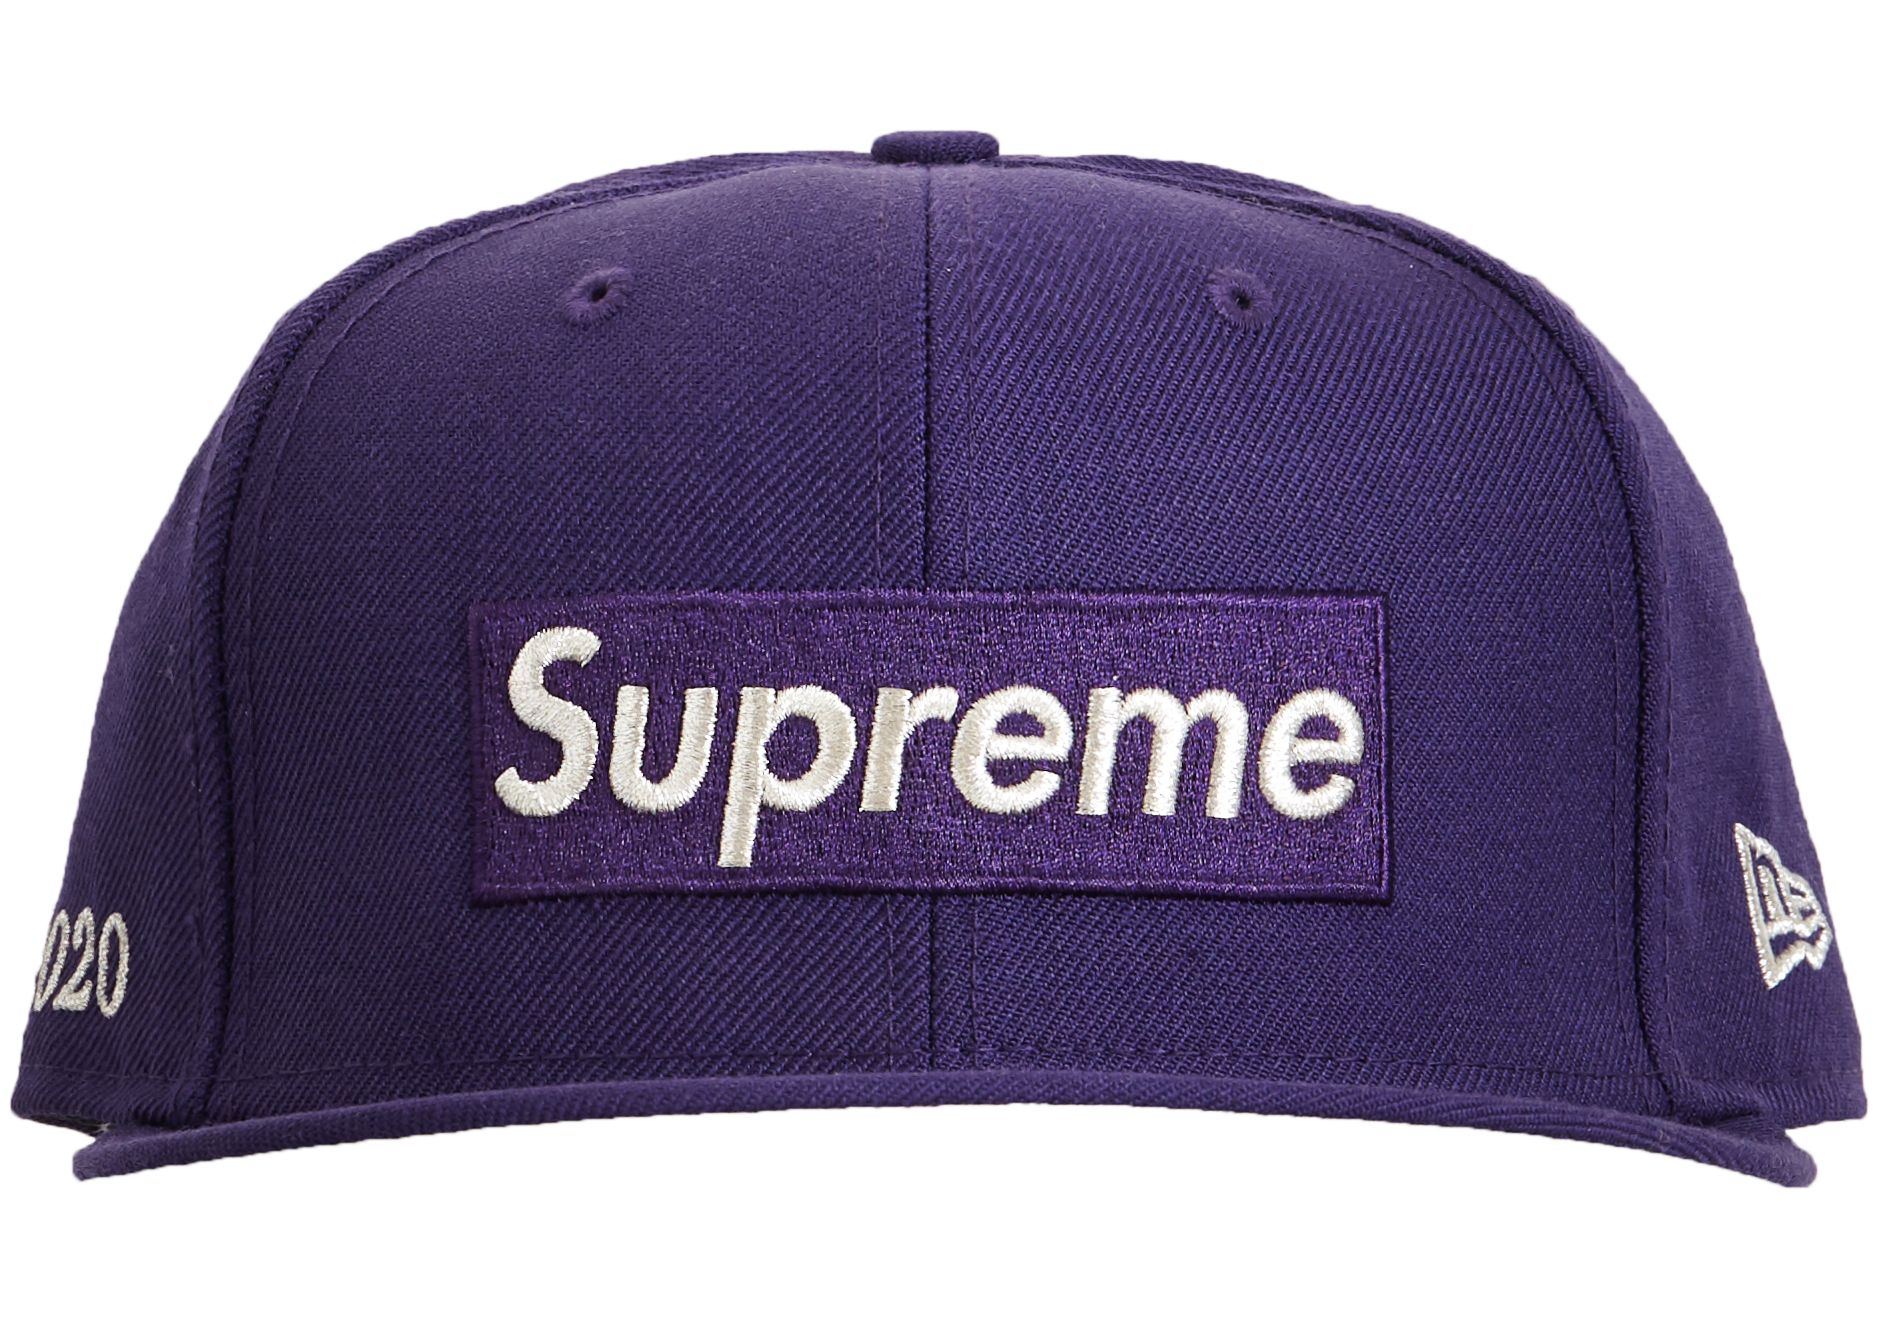 Supreme $1M Metallic Box Logo New Era Purple